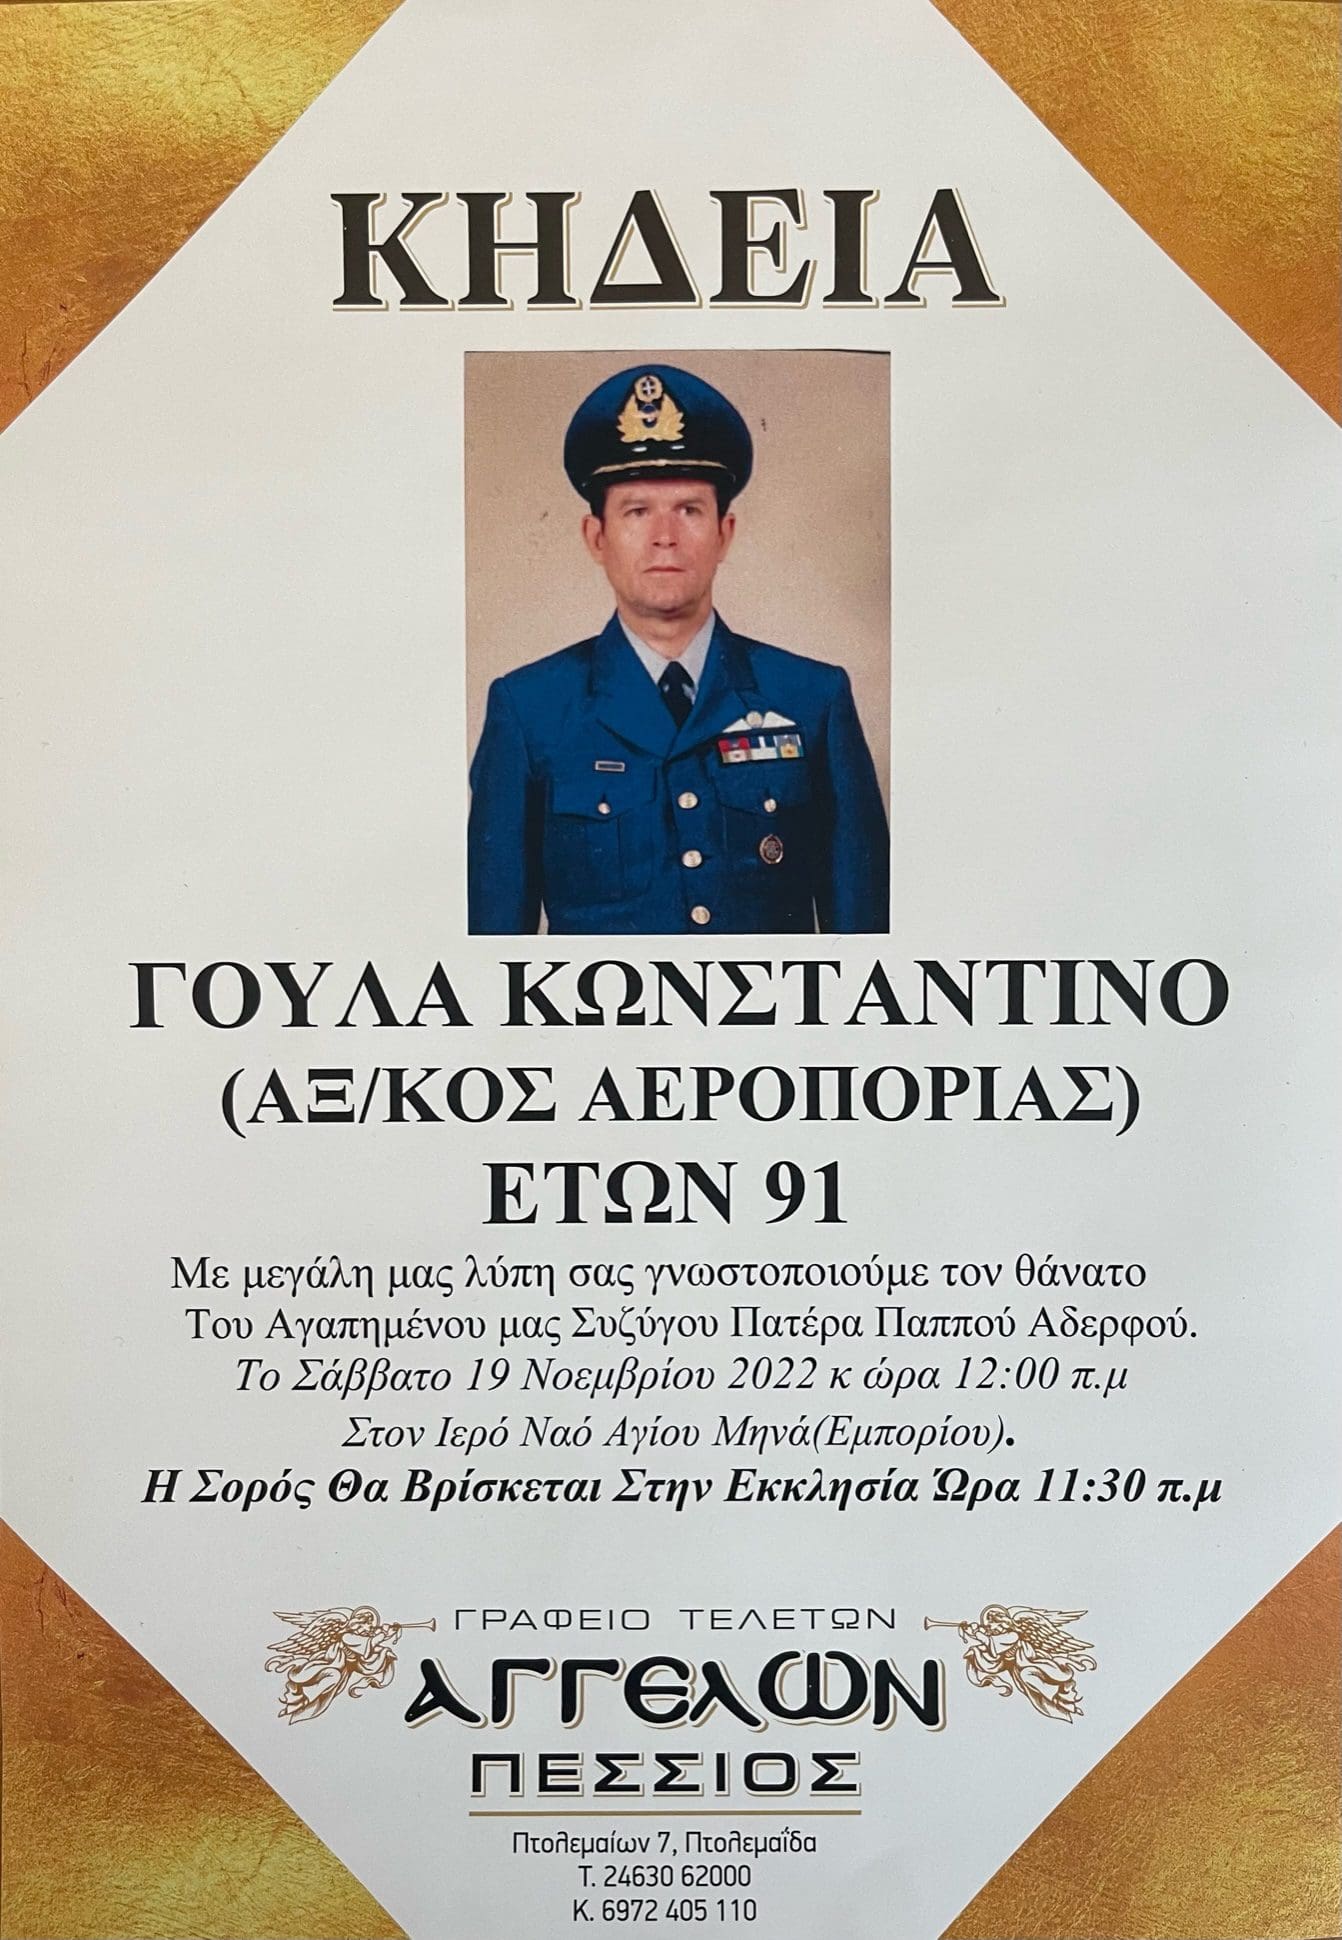 Koινωνικά - Κηδείες- Έφυγε από την ζωή ο Γούλας Κωνσταντίνος Αξιωματικός (Ε.Α. ) της Αεροπορίας από το Εμπόριο Εορδαίας